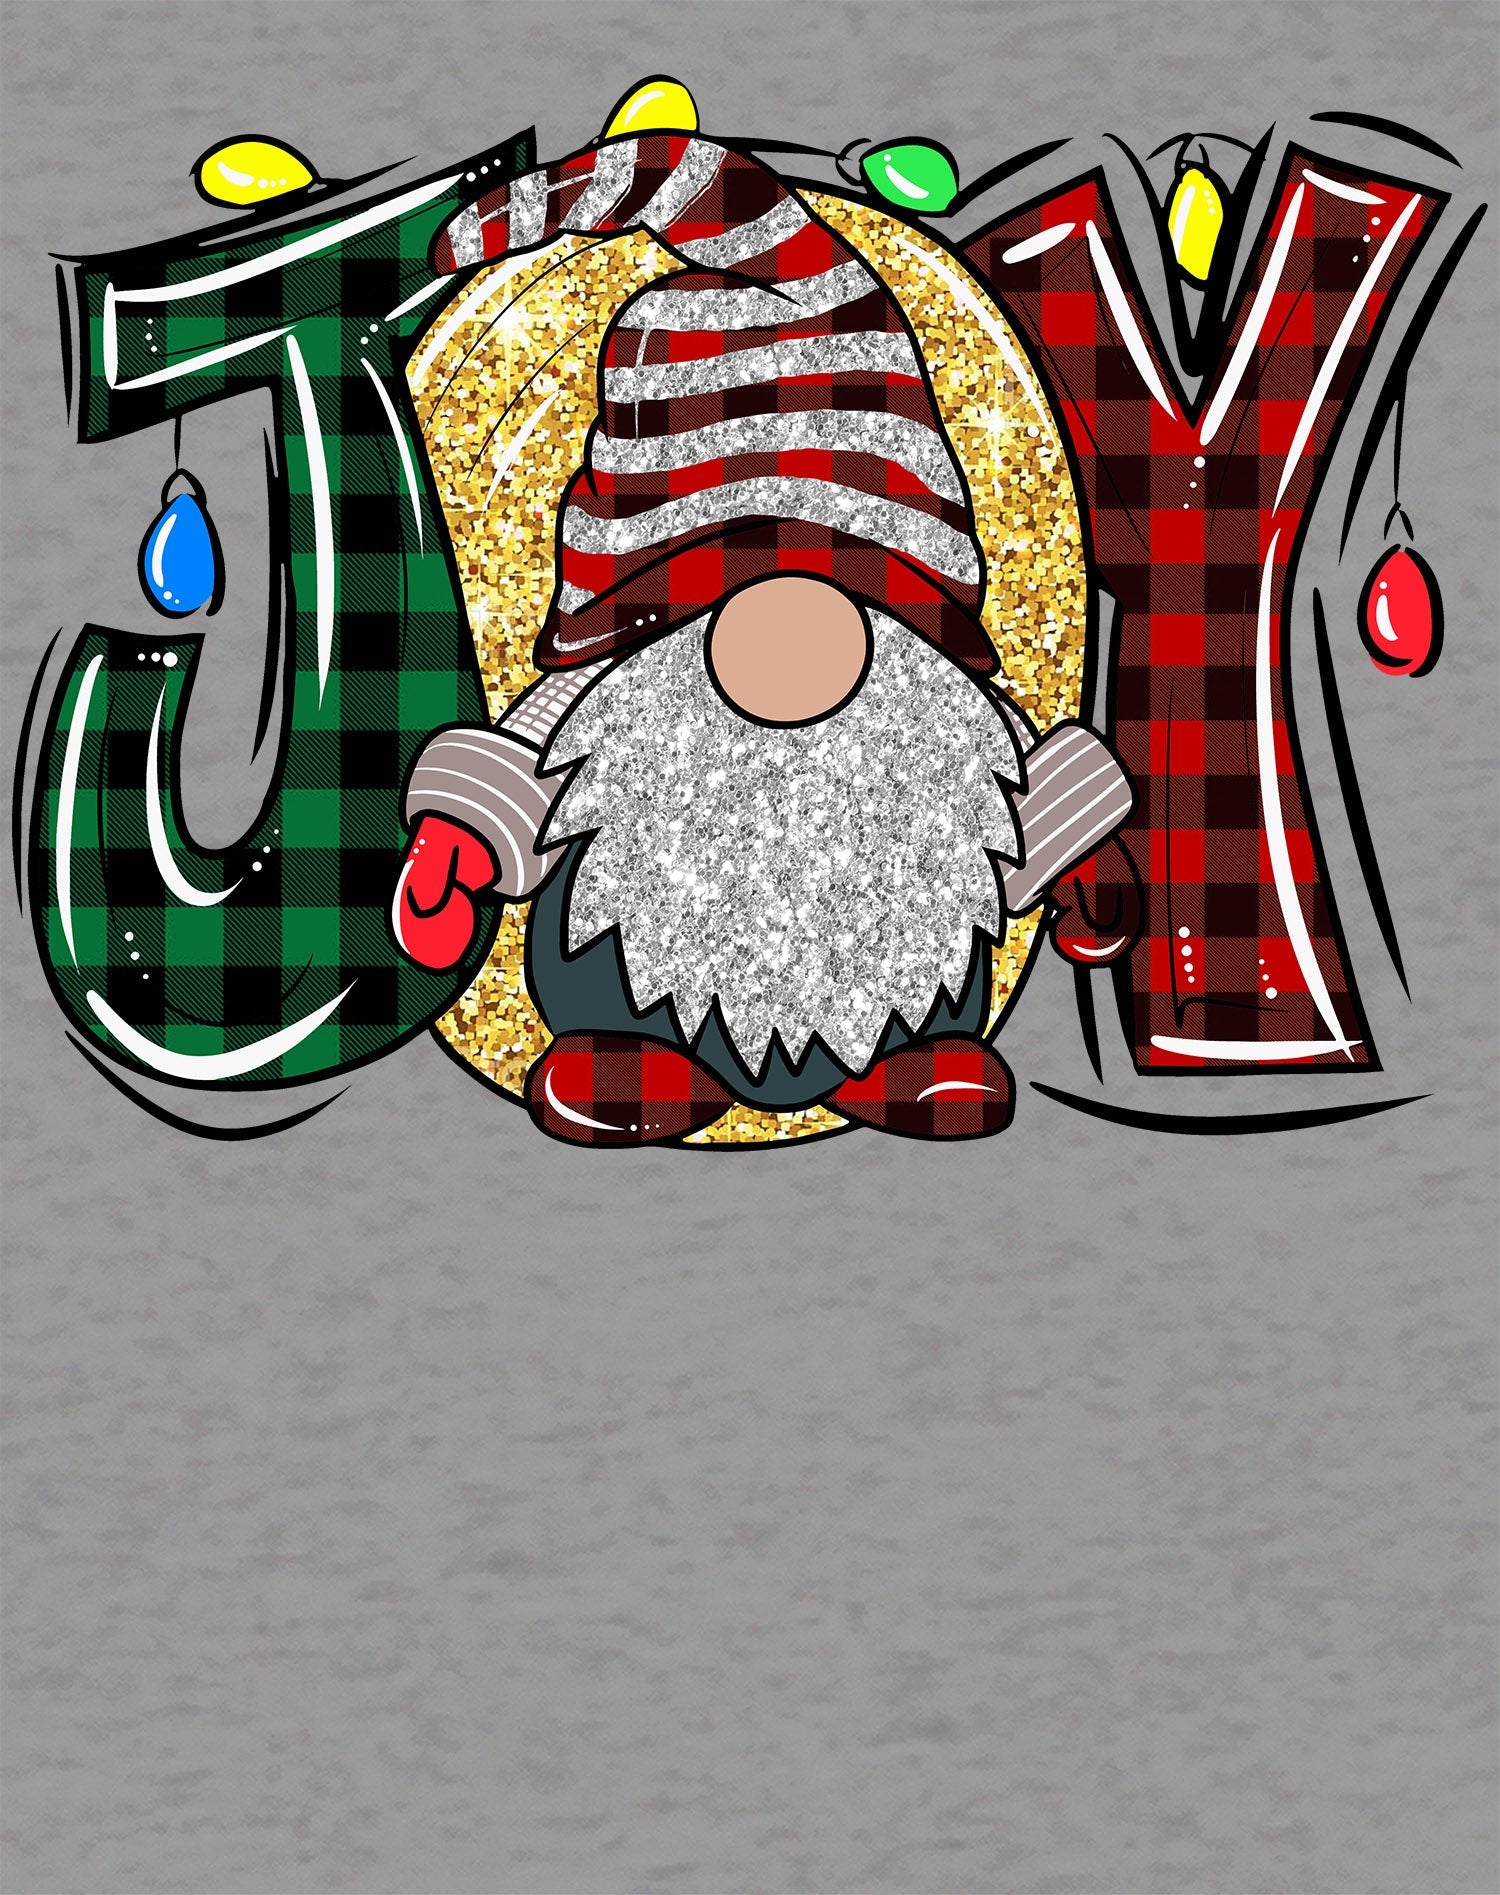 Christmas Gnome Joy Sparkle Meme Traditional Xmas Family Fun Men's T-Shirt